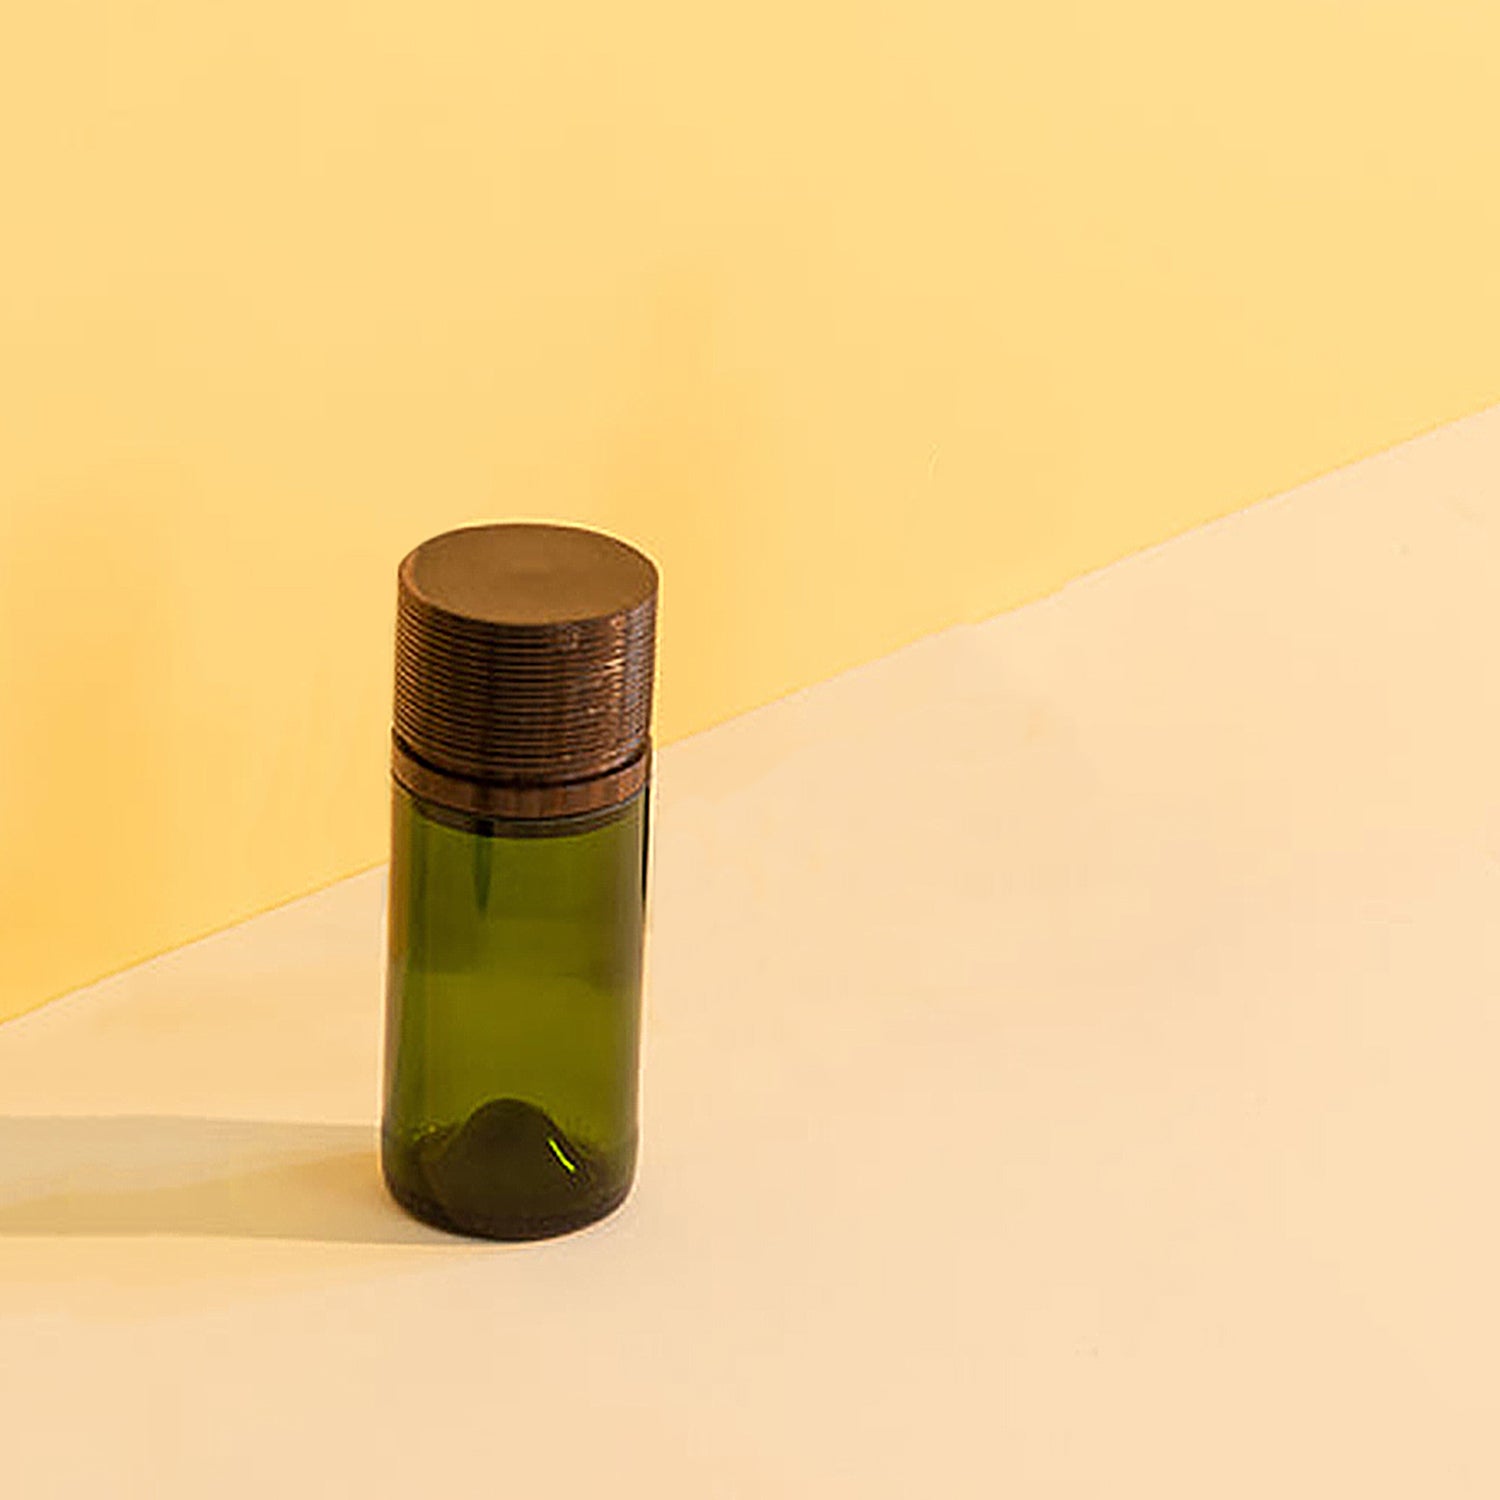 Blantyre Jar - "Green Cylinder"